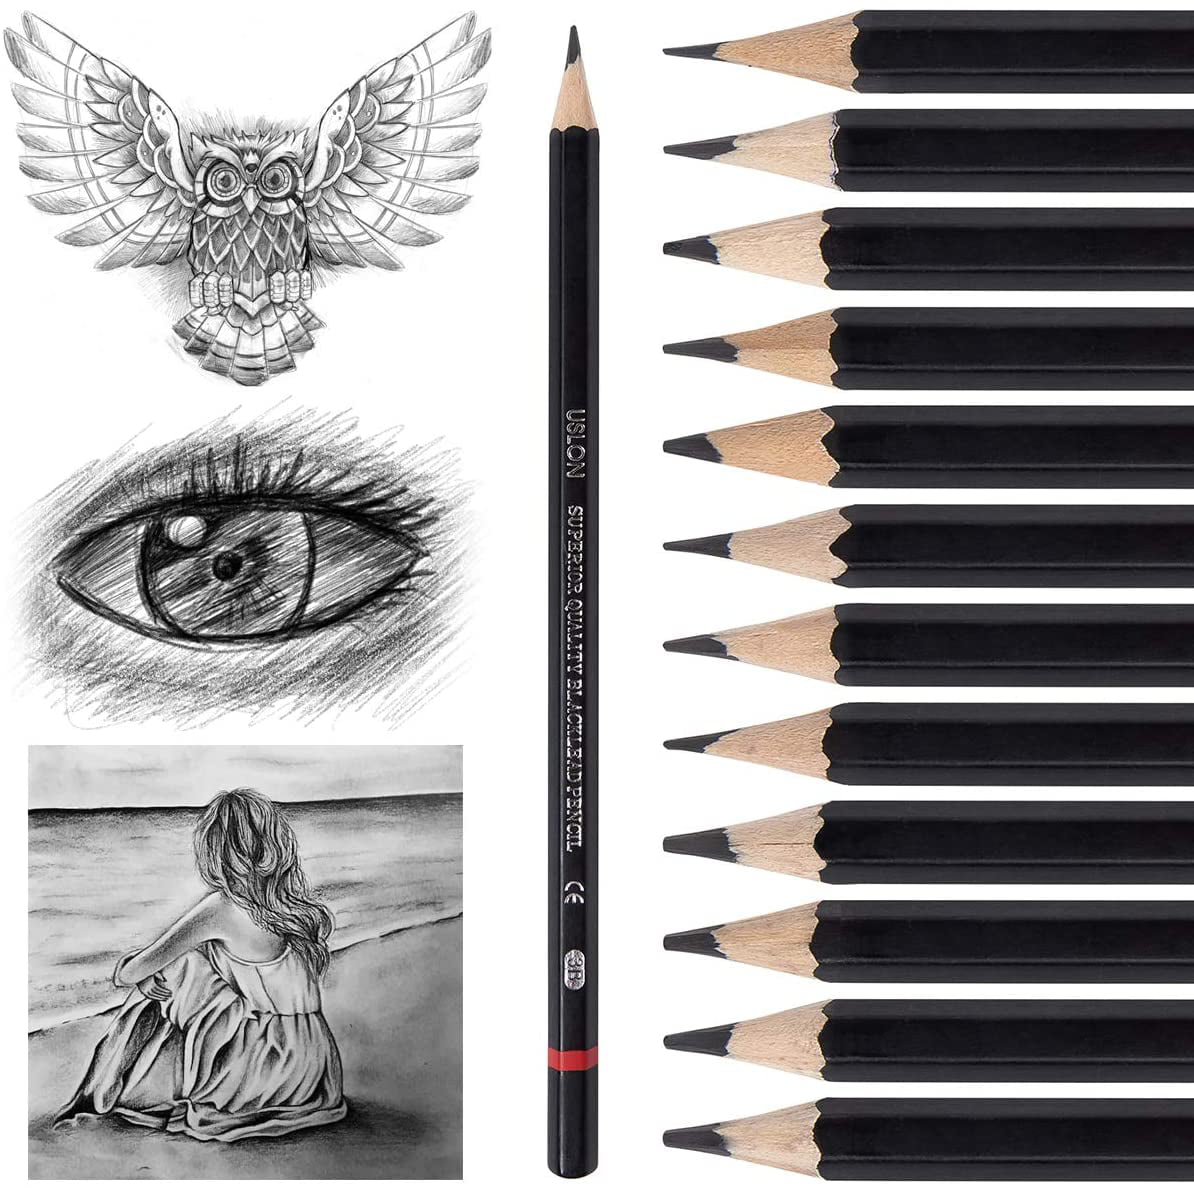 Tamata Professional Drawing Sketching Pencil Set - 12 Pieces Art Drawing Graphite Pencils(12B - 4H), Ideal for Drawing Art, Sketching, Shading, for